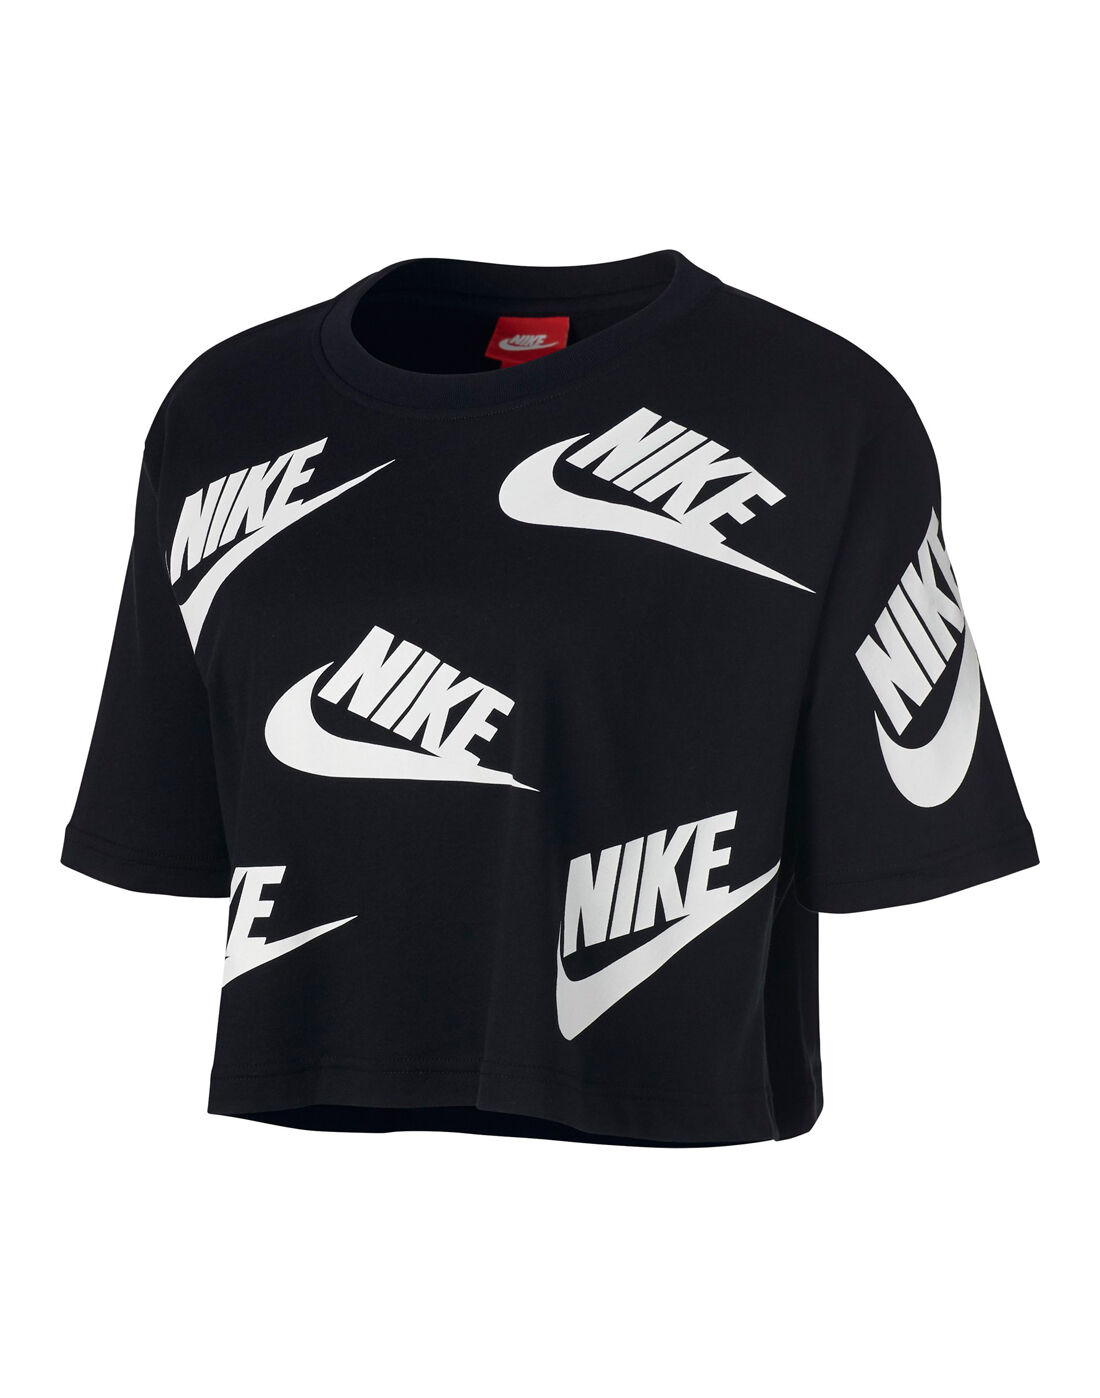 Nike Womens Futura Crop T-Shirt - Black 